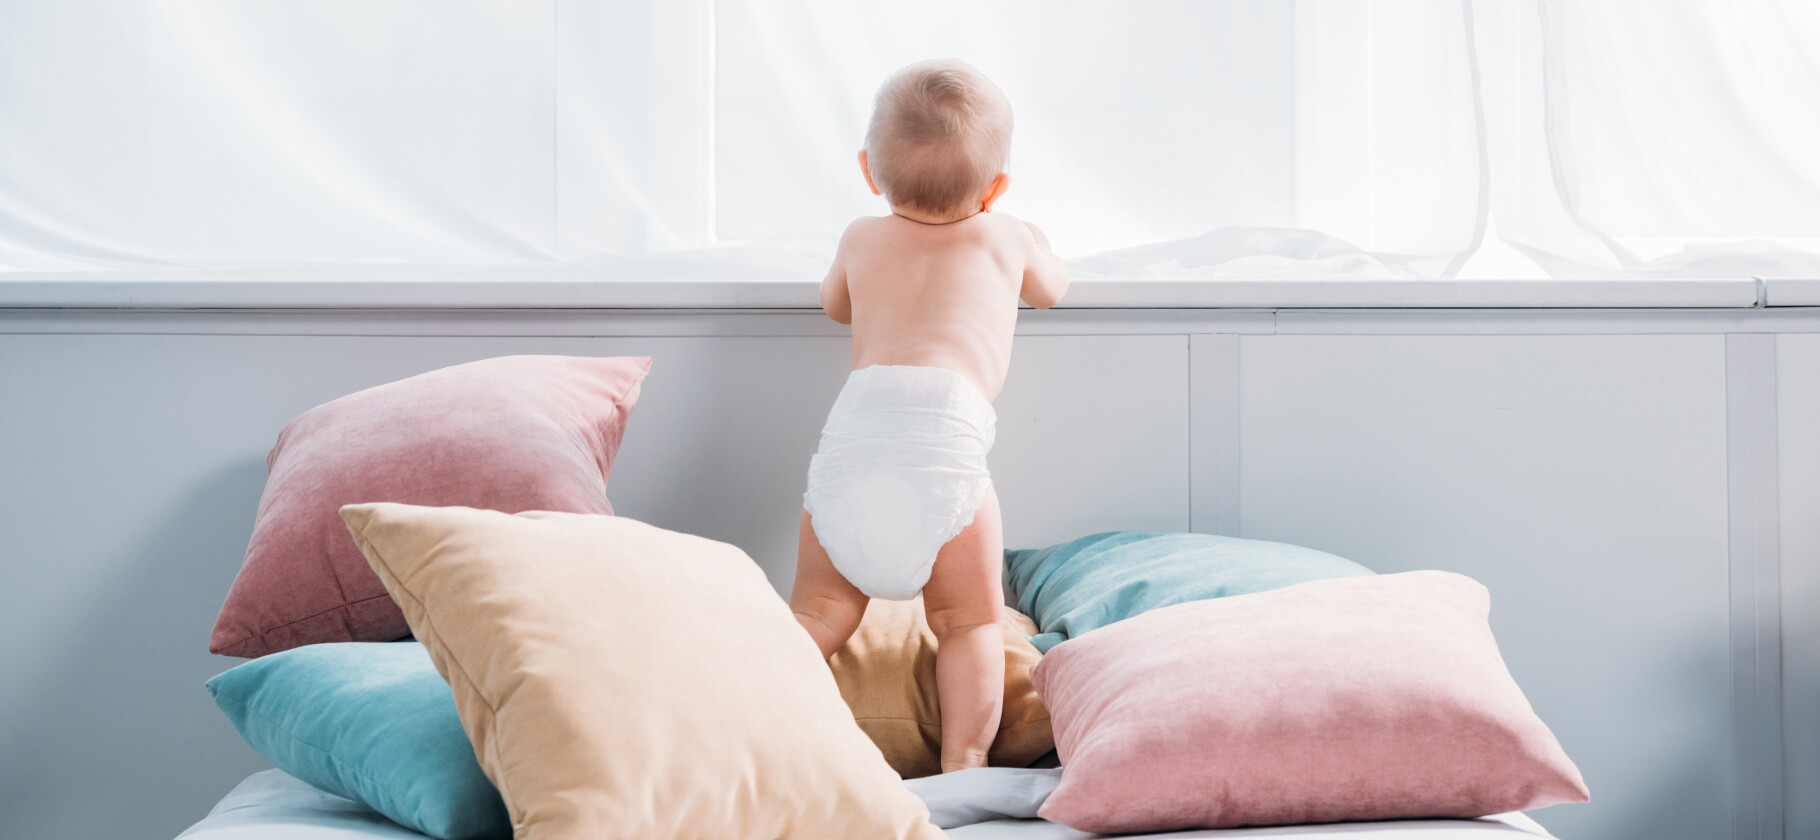 Как защитить младенца во время сна: 9 правил для родителей